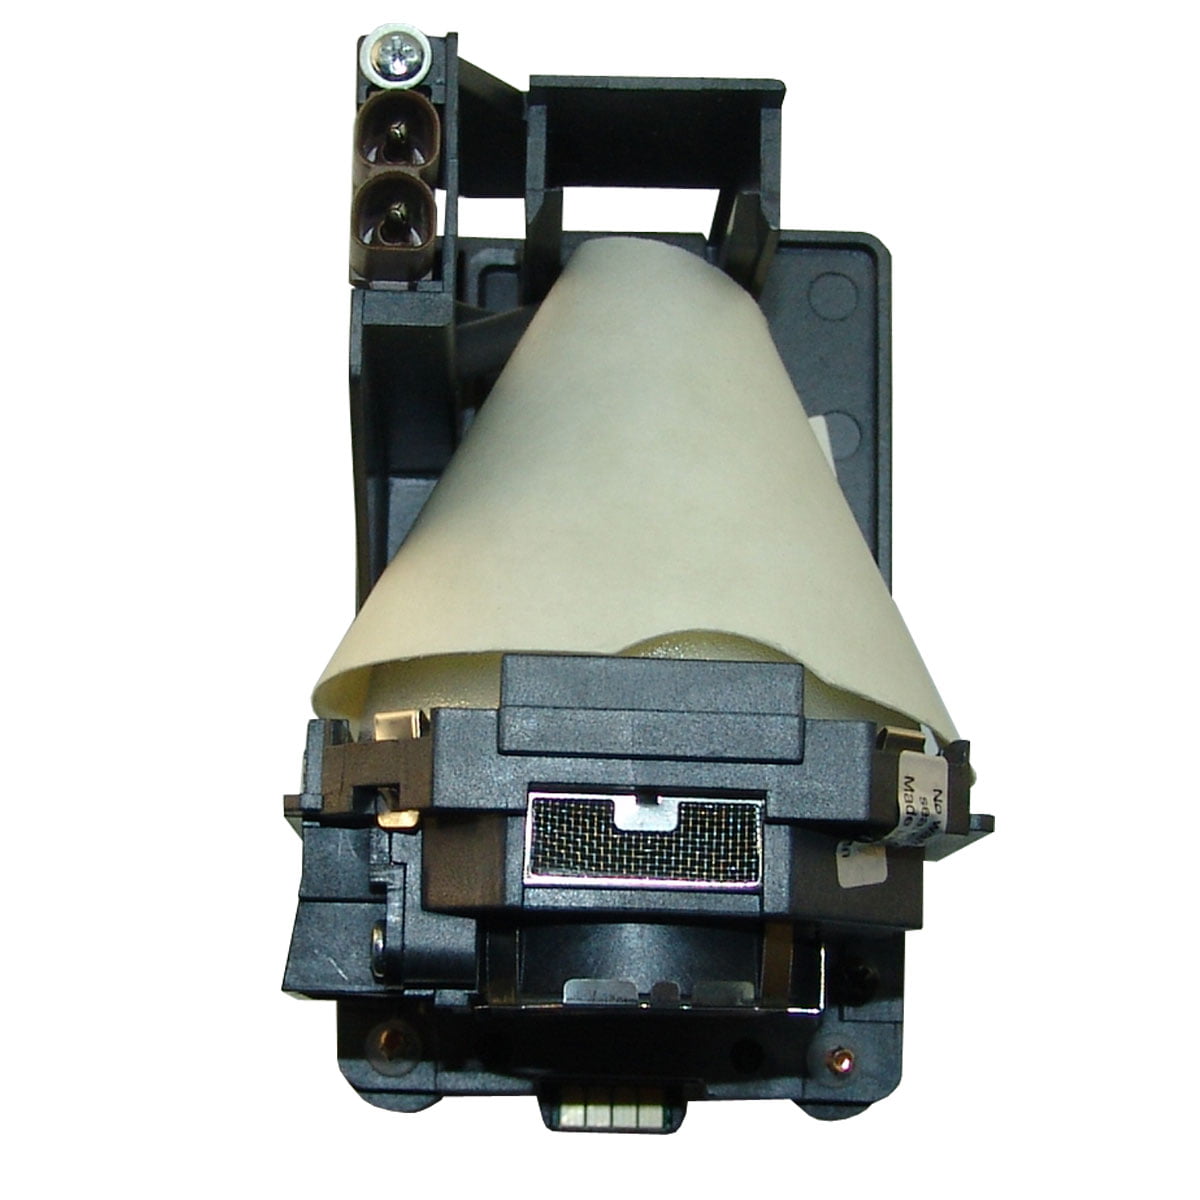 Panasonic Et-laf100 ETLAF100 Lamp in Housing for Projector Model Ptf100u for sale online 